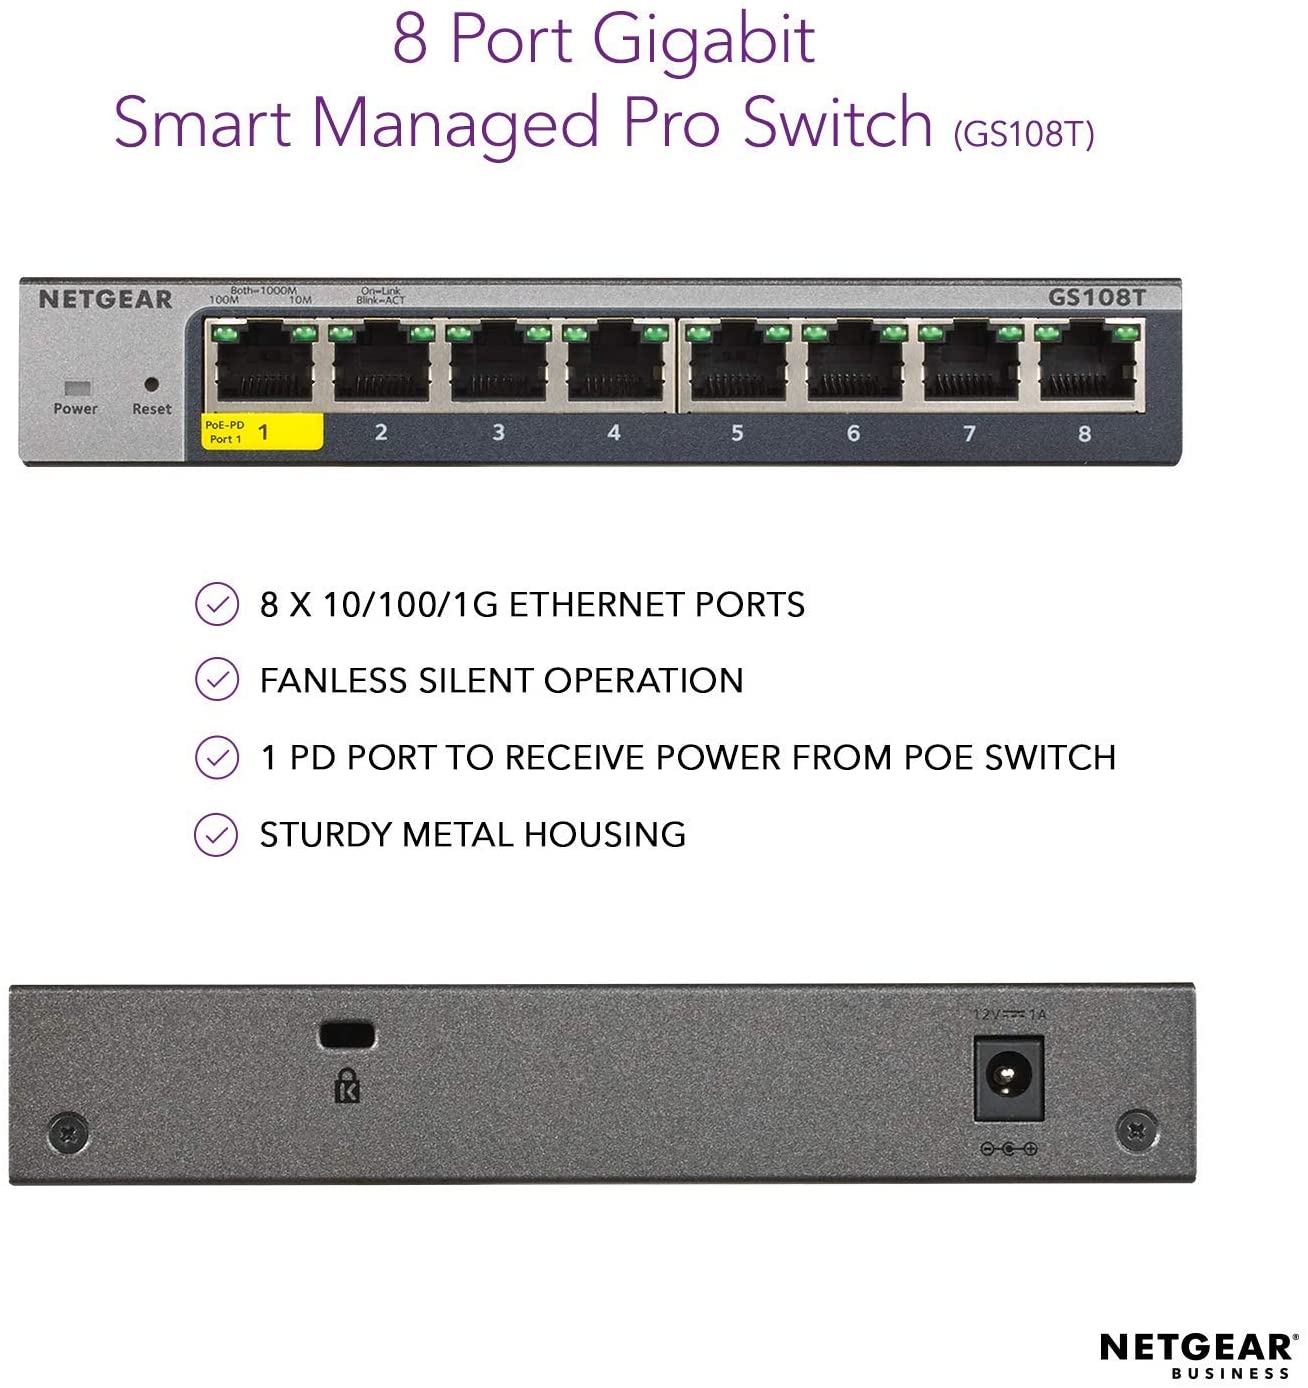 NETGEAR 8 port Gigabit SMART MANAGED PRO SWITCH W/CLOUD MANAGEMENT